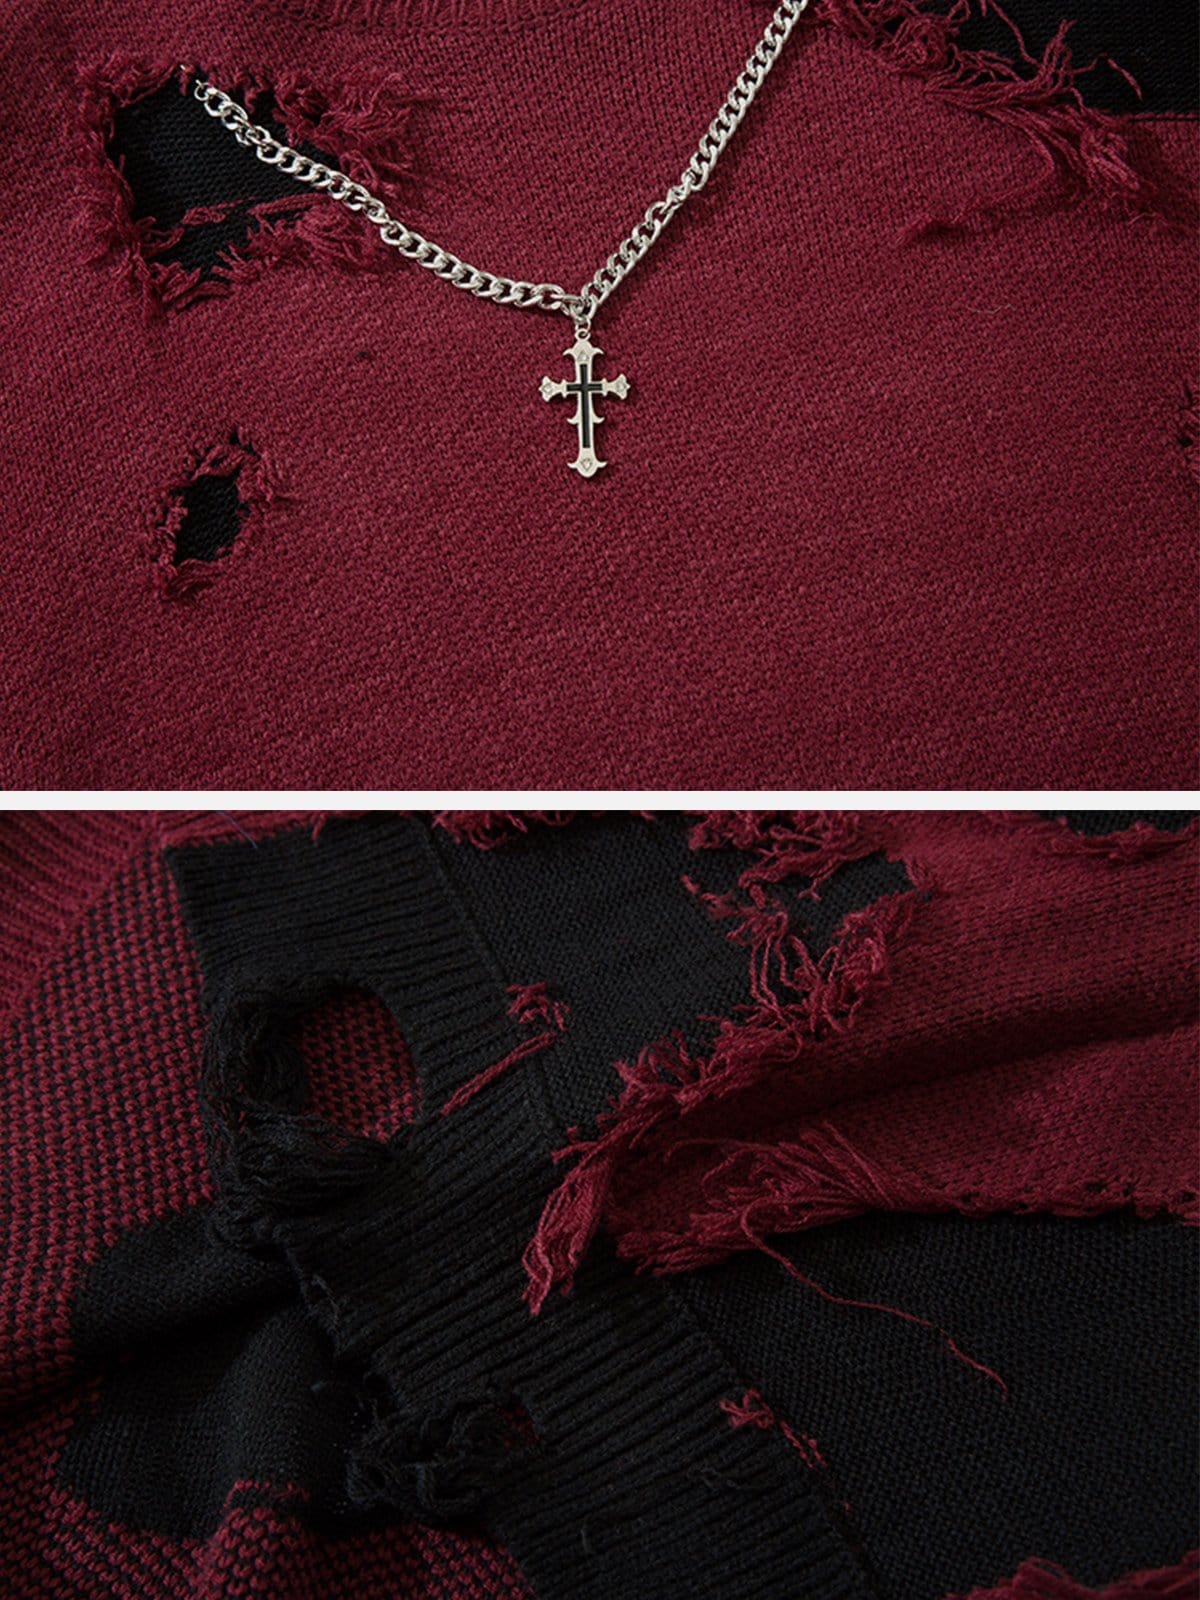 NEV Hole Crucifix Necklace Sweater